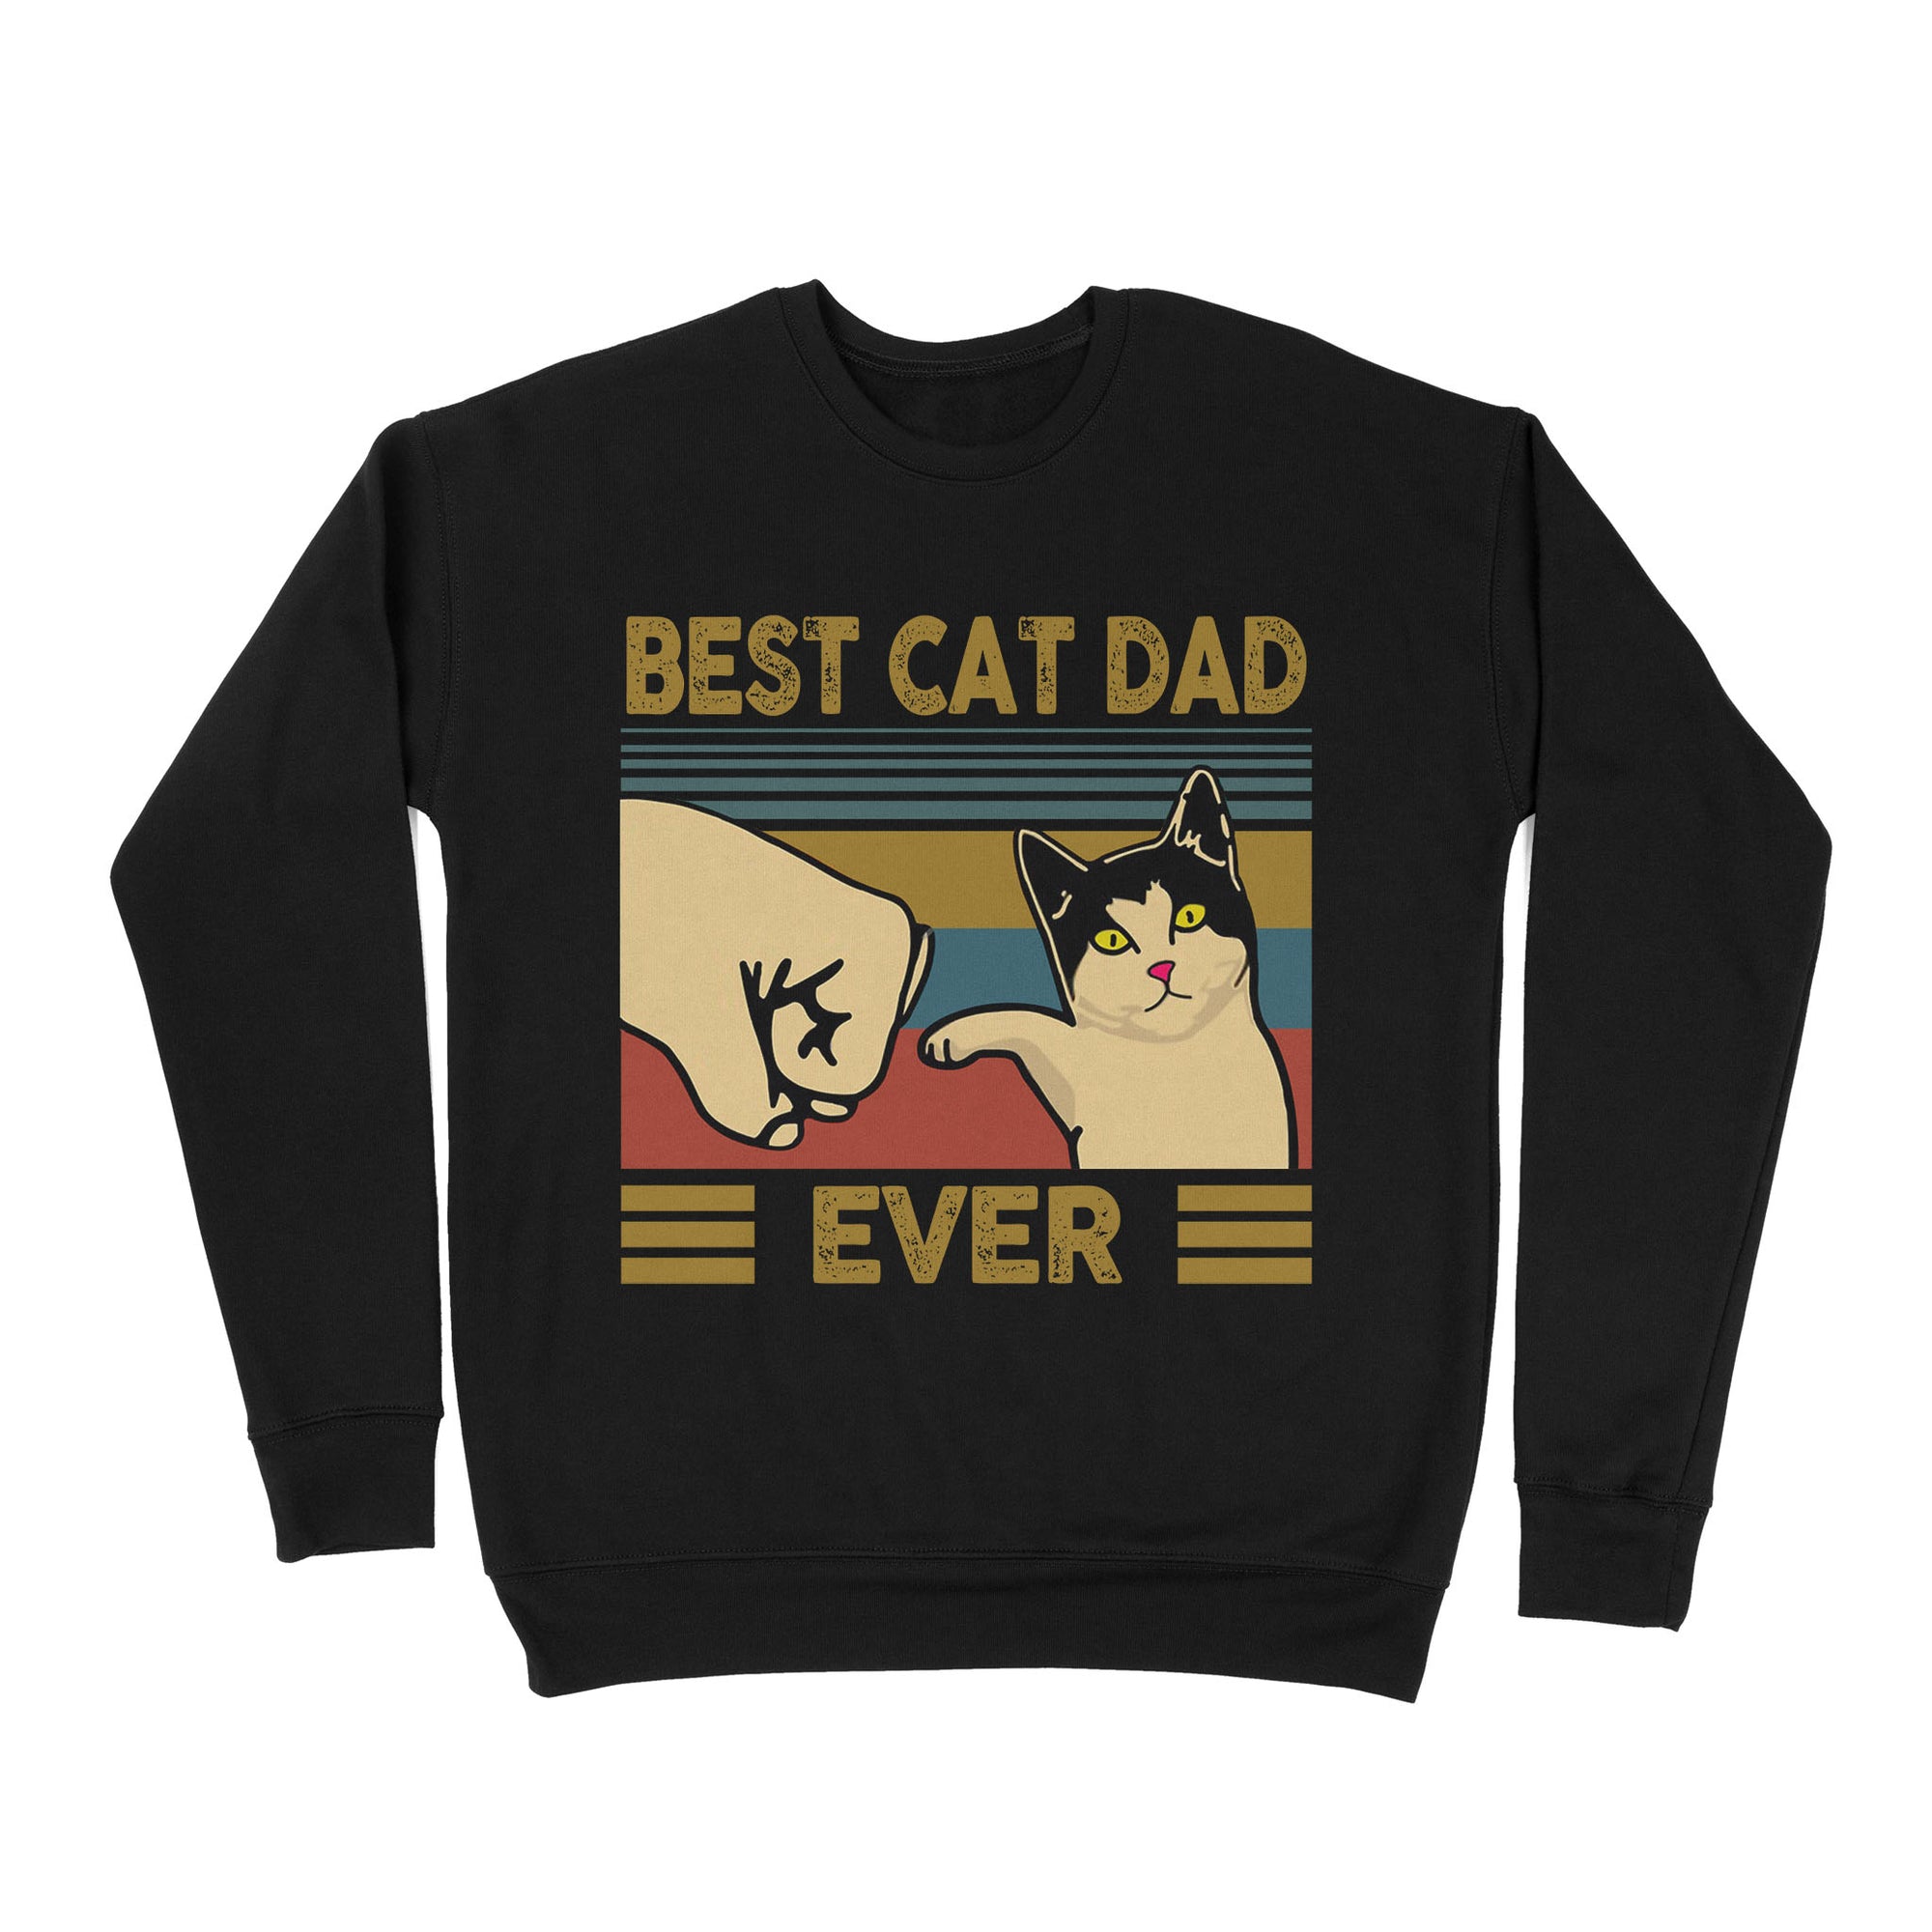 Premium Crew Neck Sweatshirt - Best Cat Dad Ever